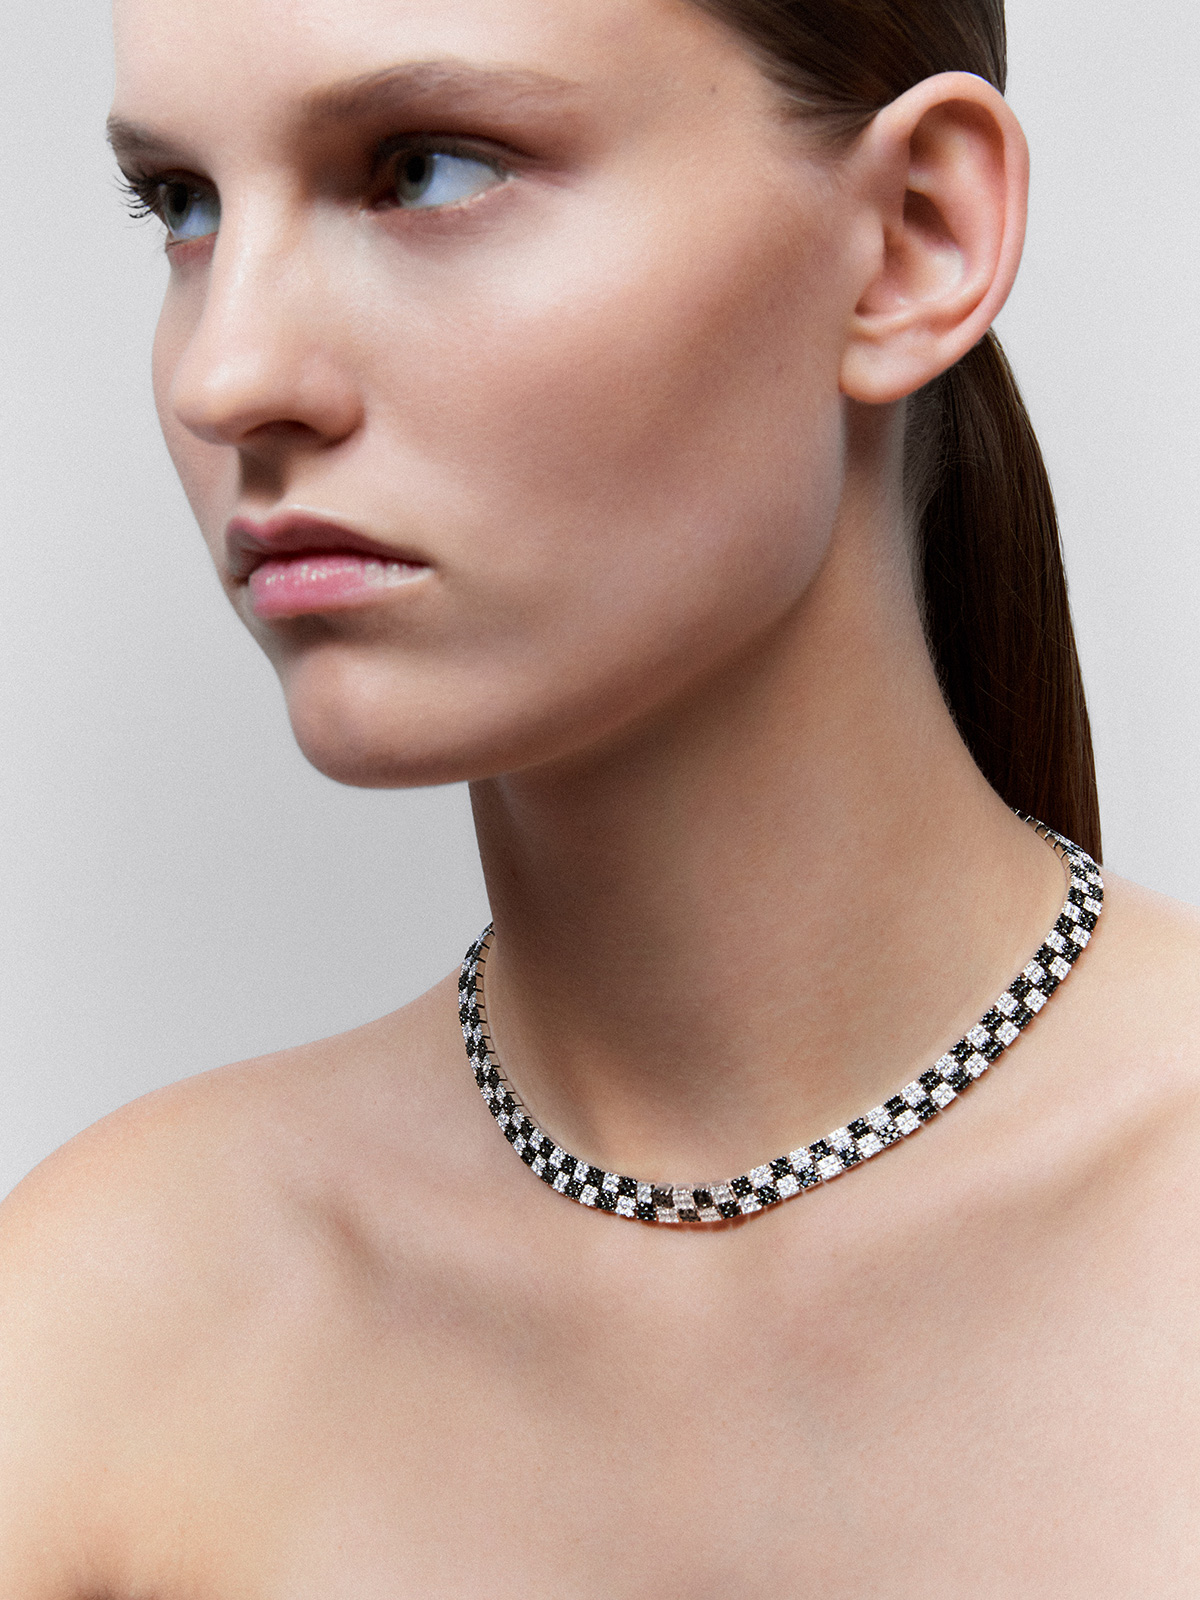 18K white gold necklace with geometric motifs, black diamonds and white diamonds